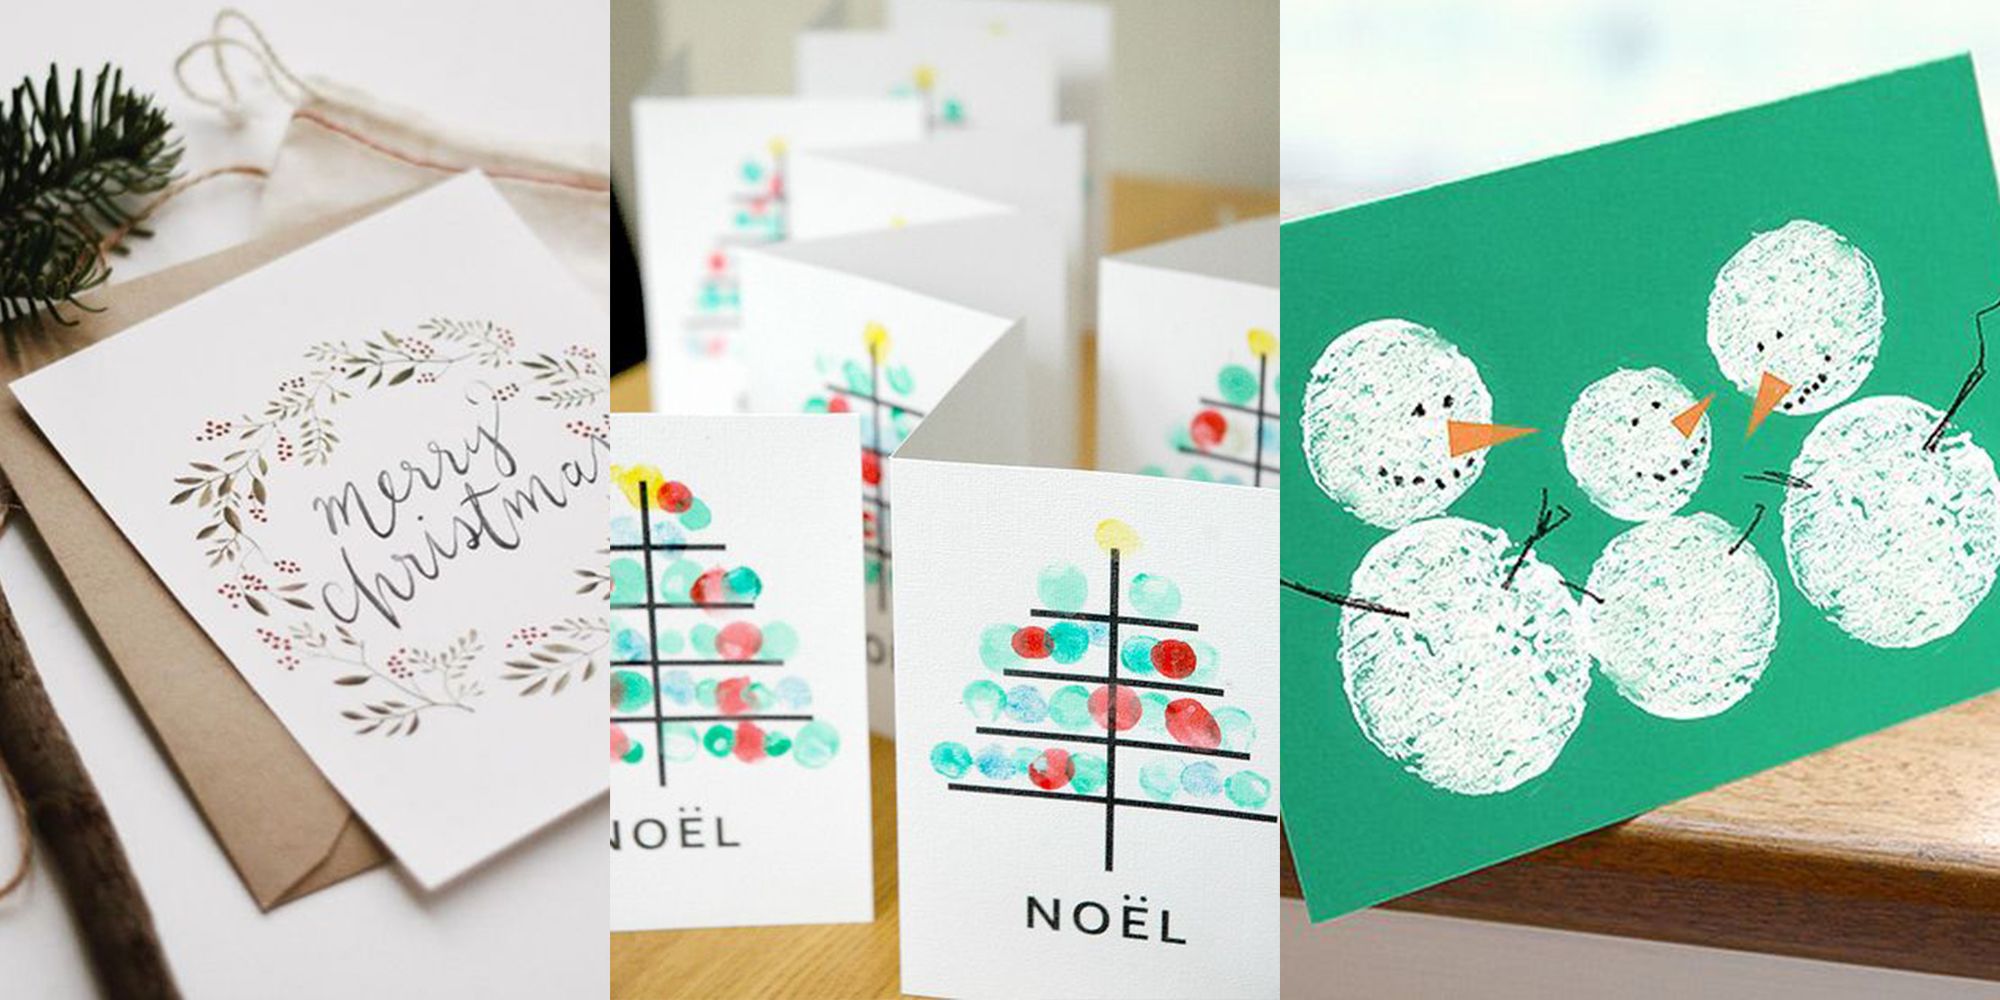 Best Christmas card ideas from Pinterest